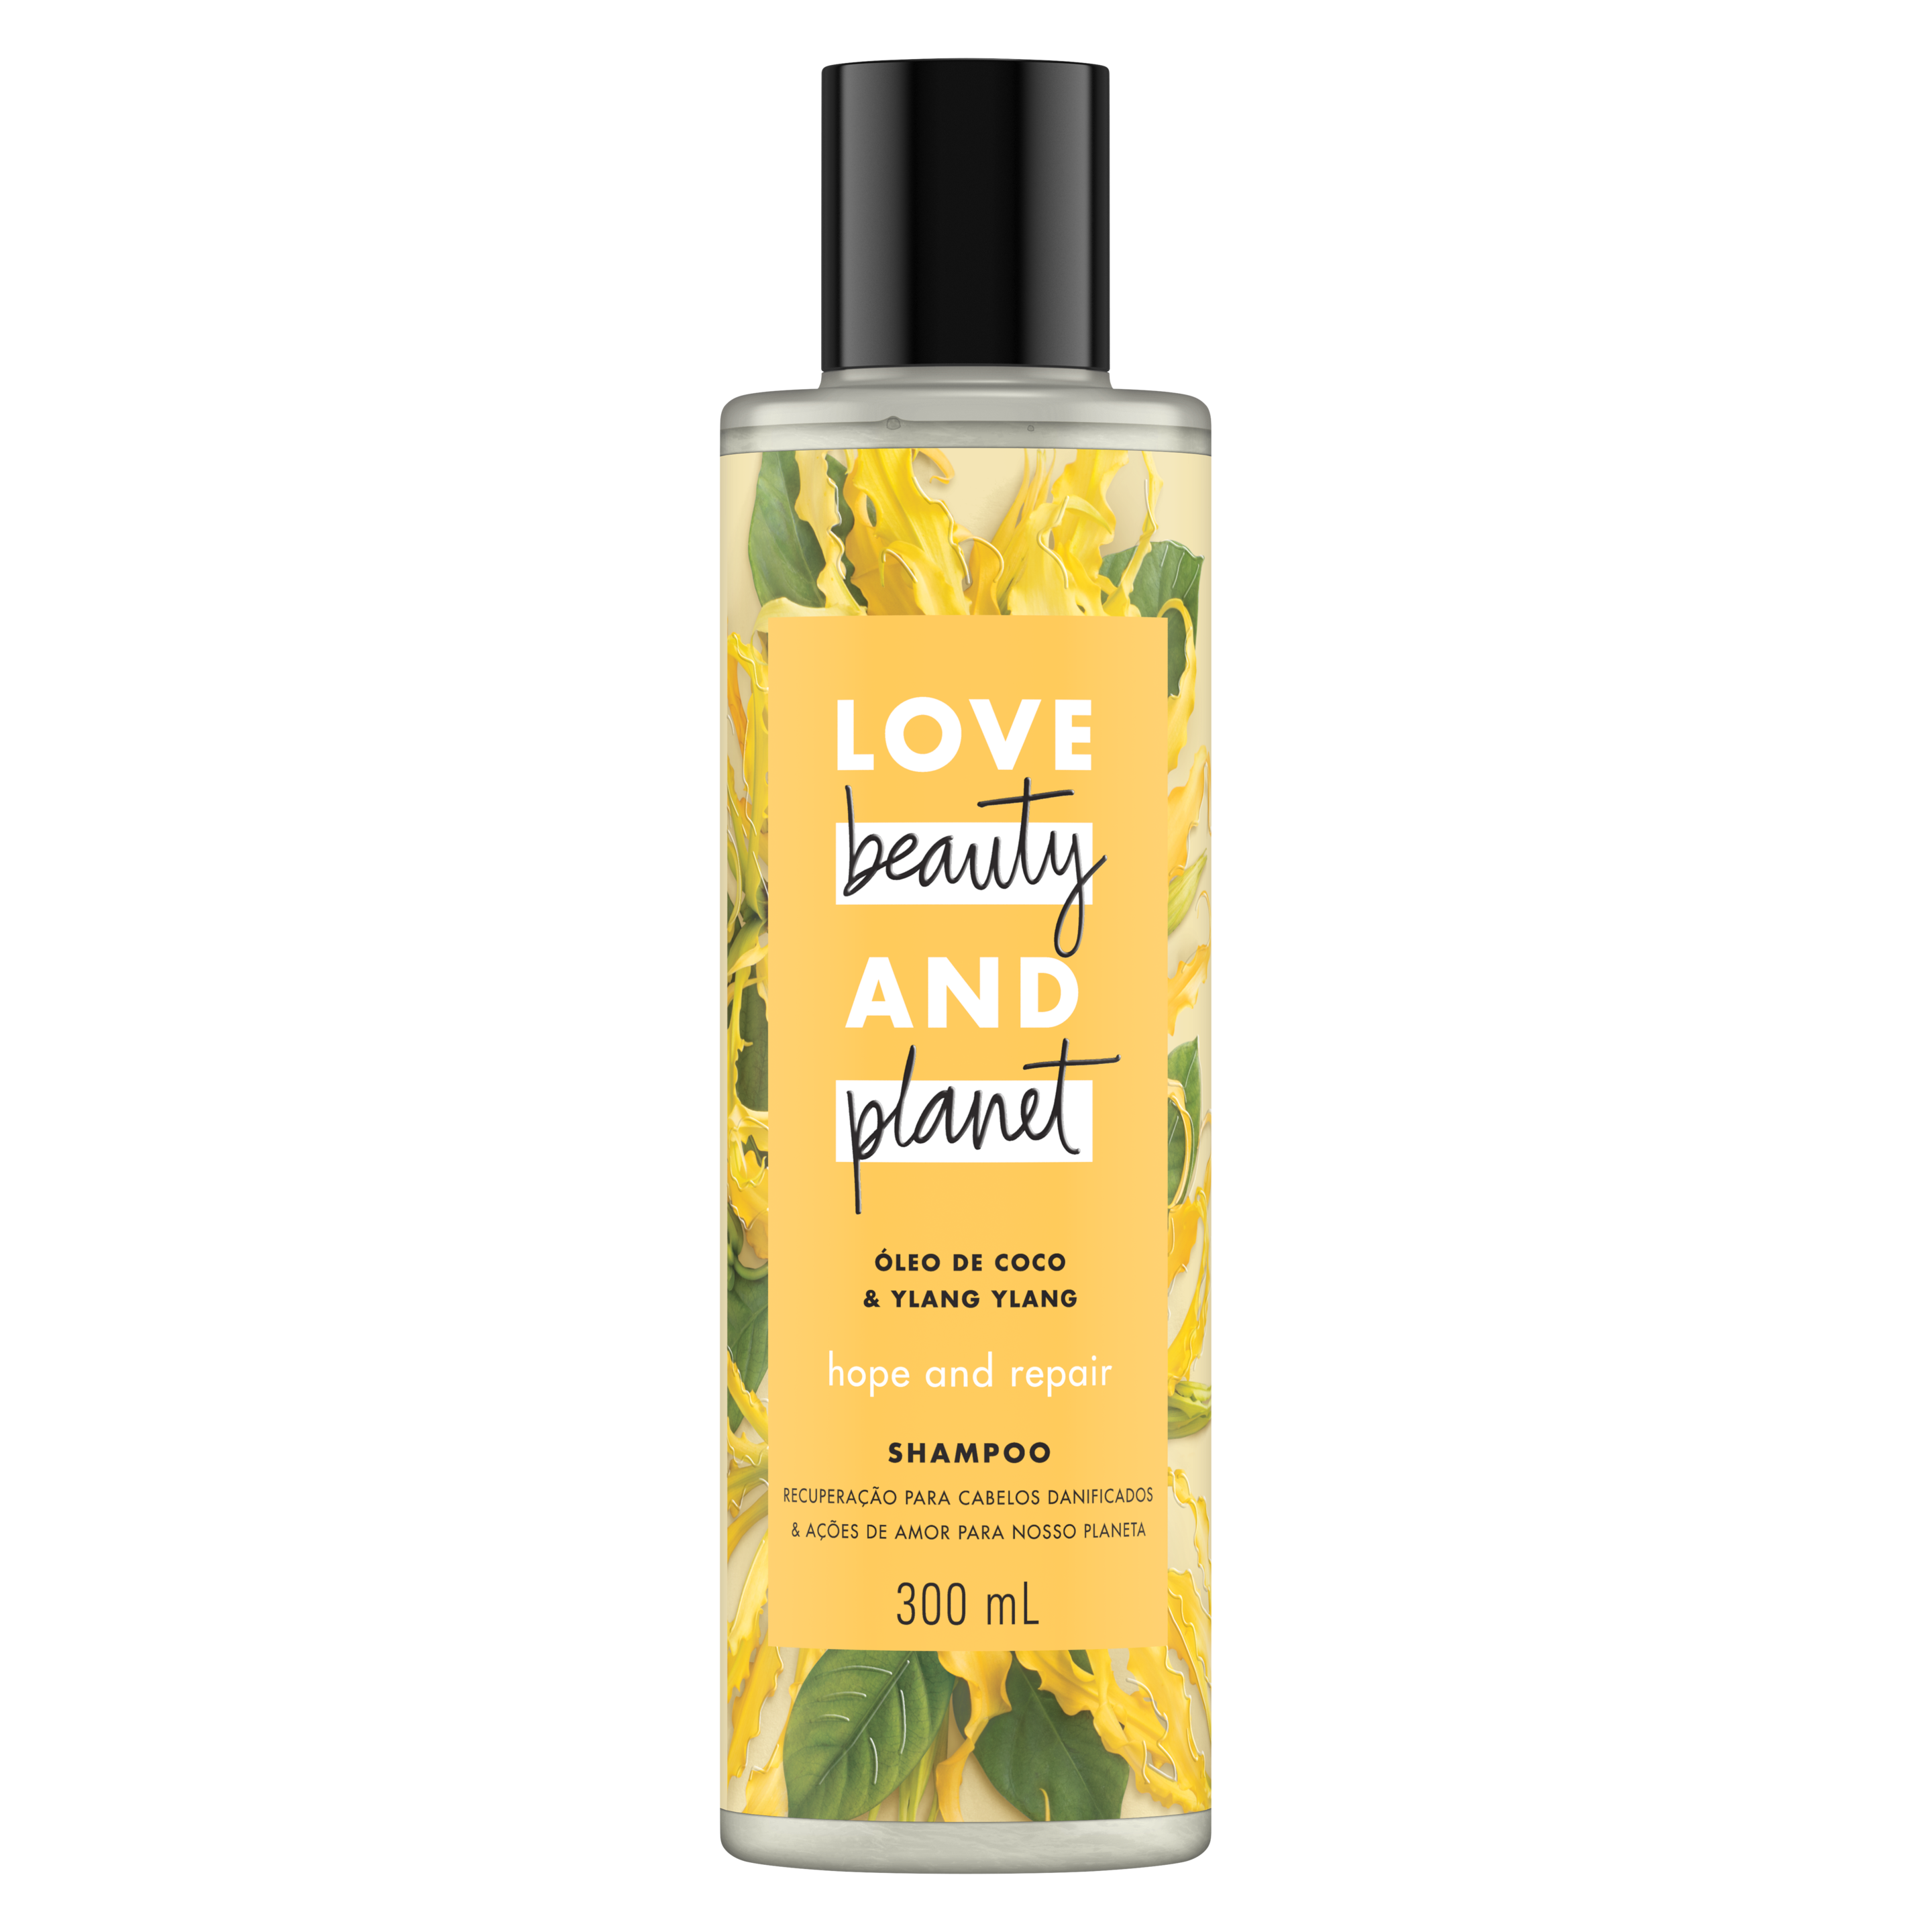 óleo de coco & ylang ylang shampoo Text